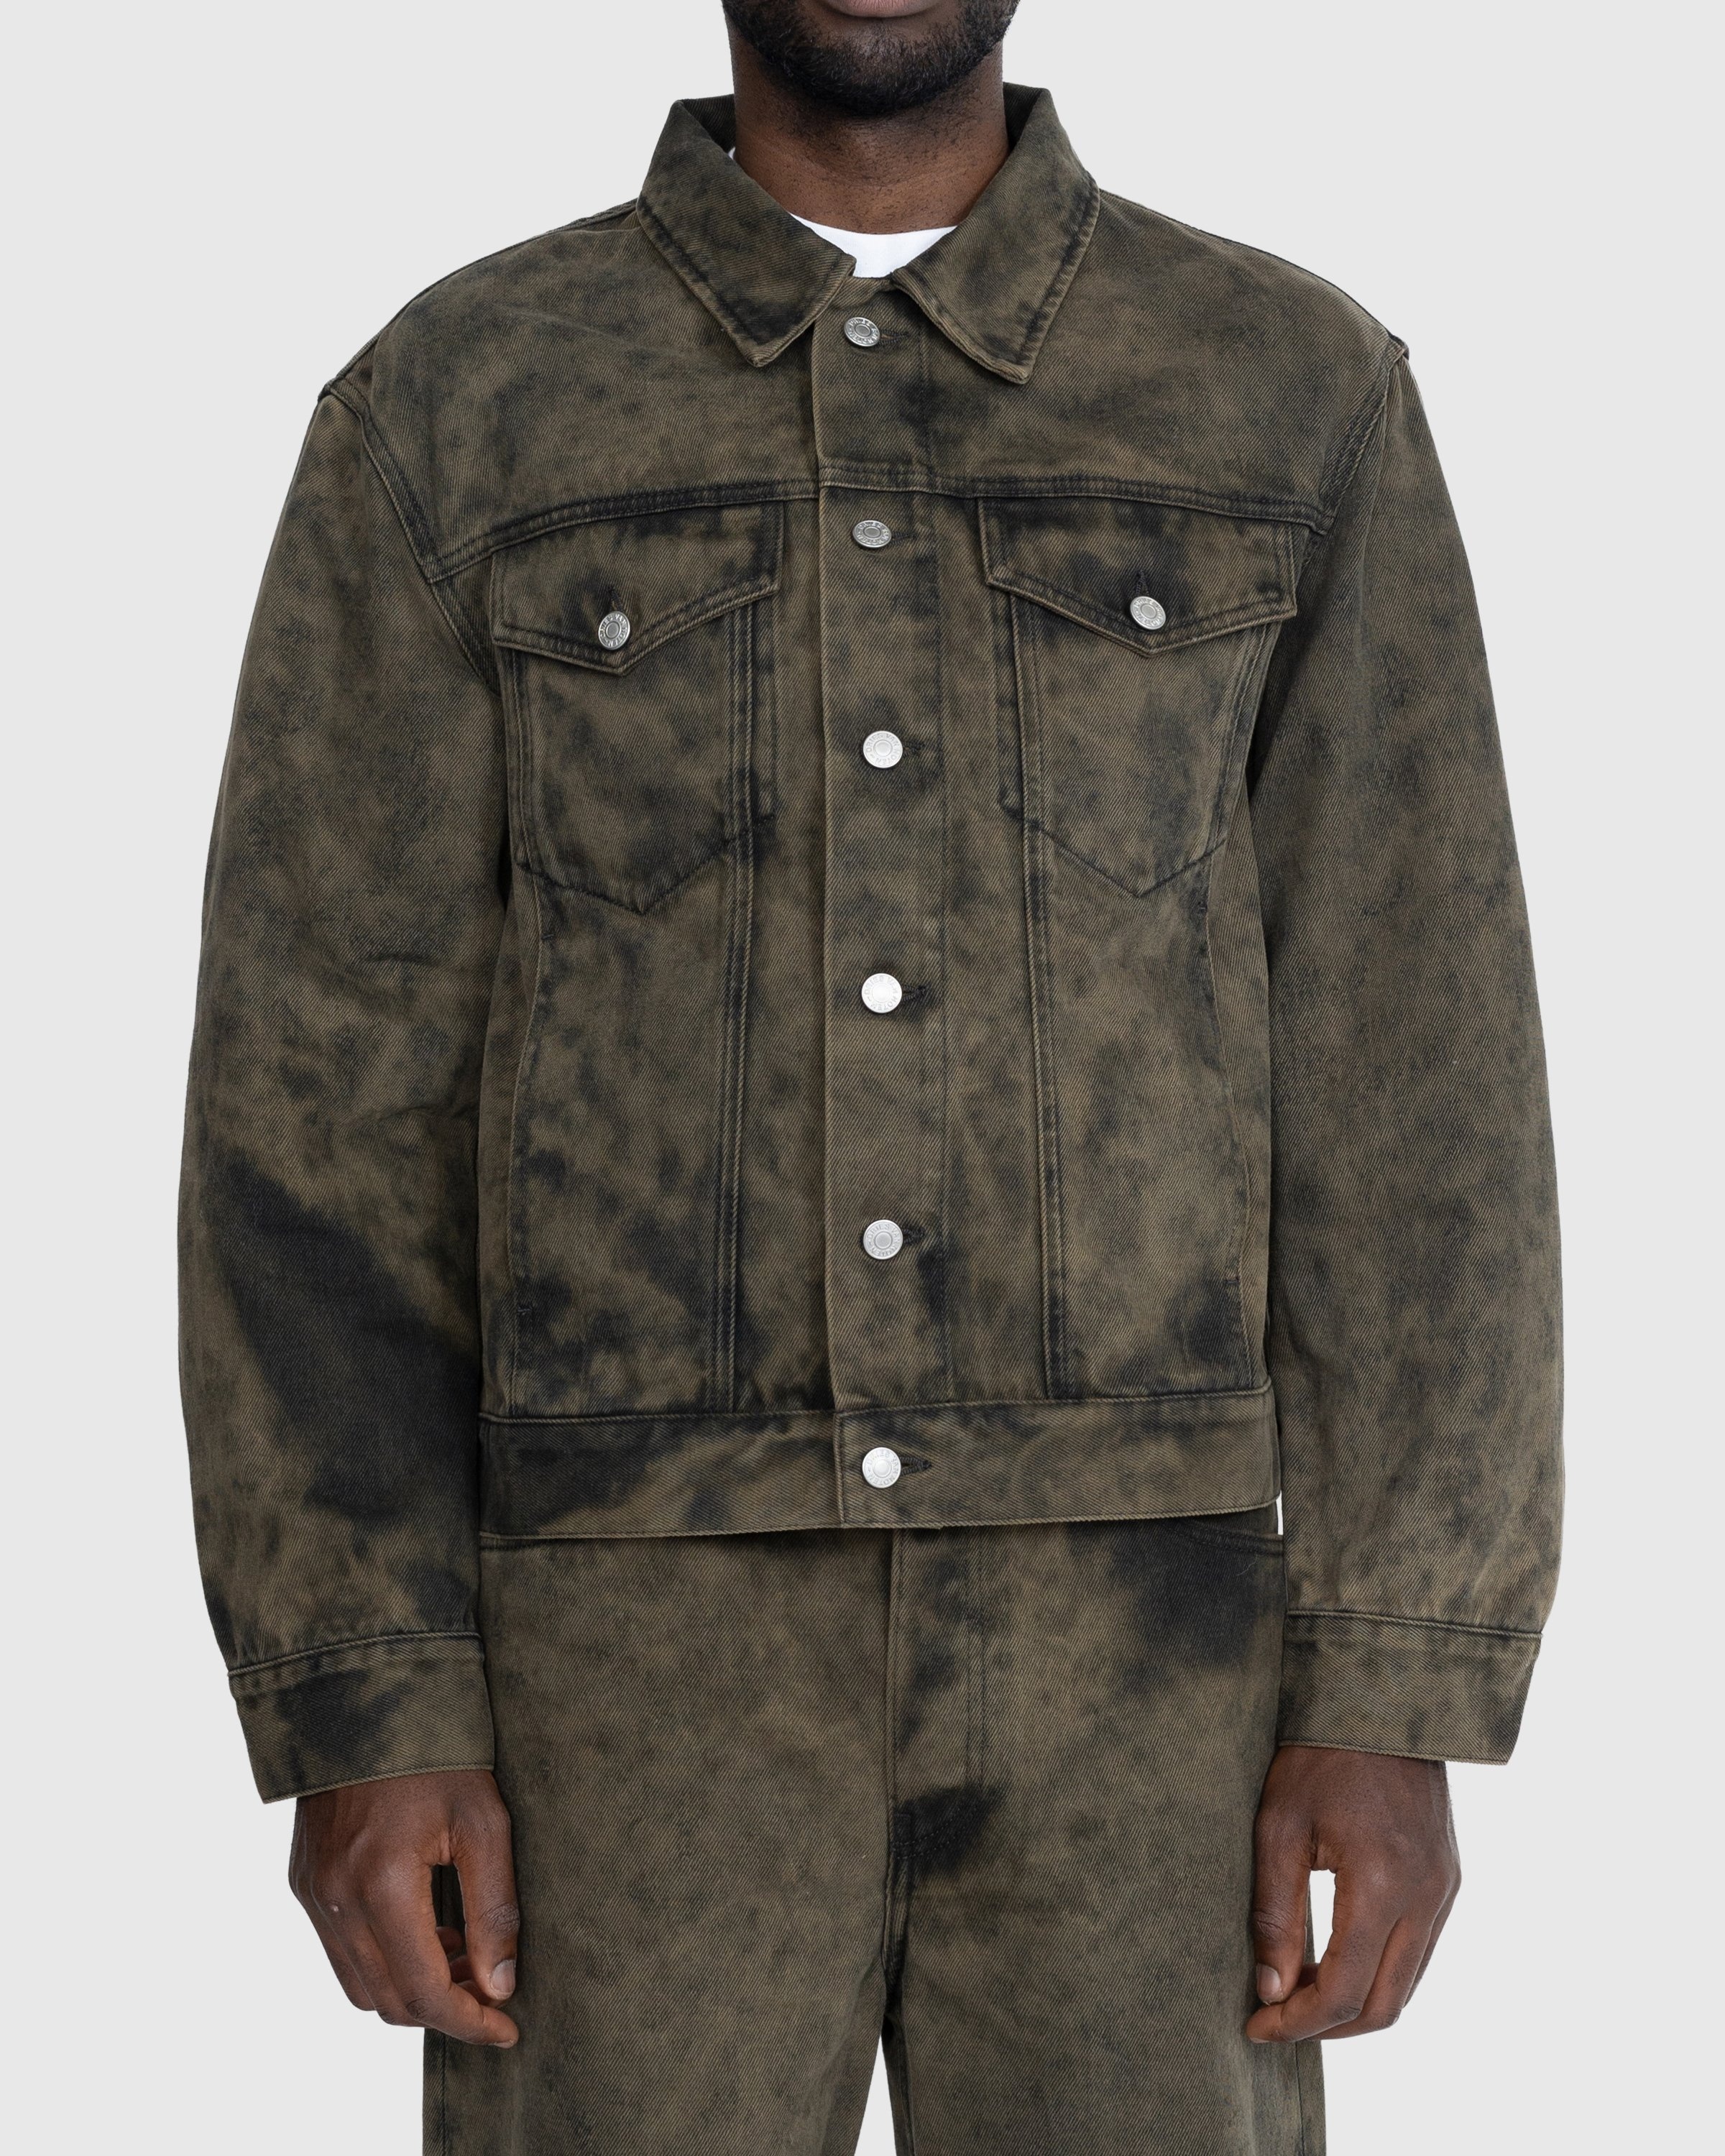 Dries van Noten – Vuskin Denim Jacket - Outerwear - Green - Image 2